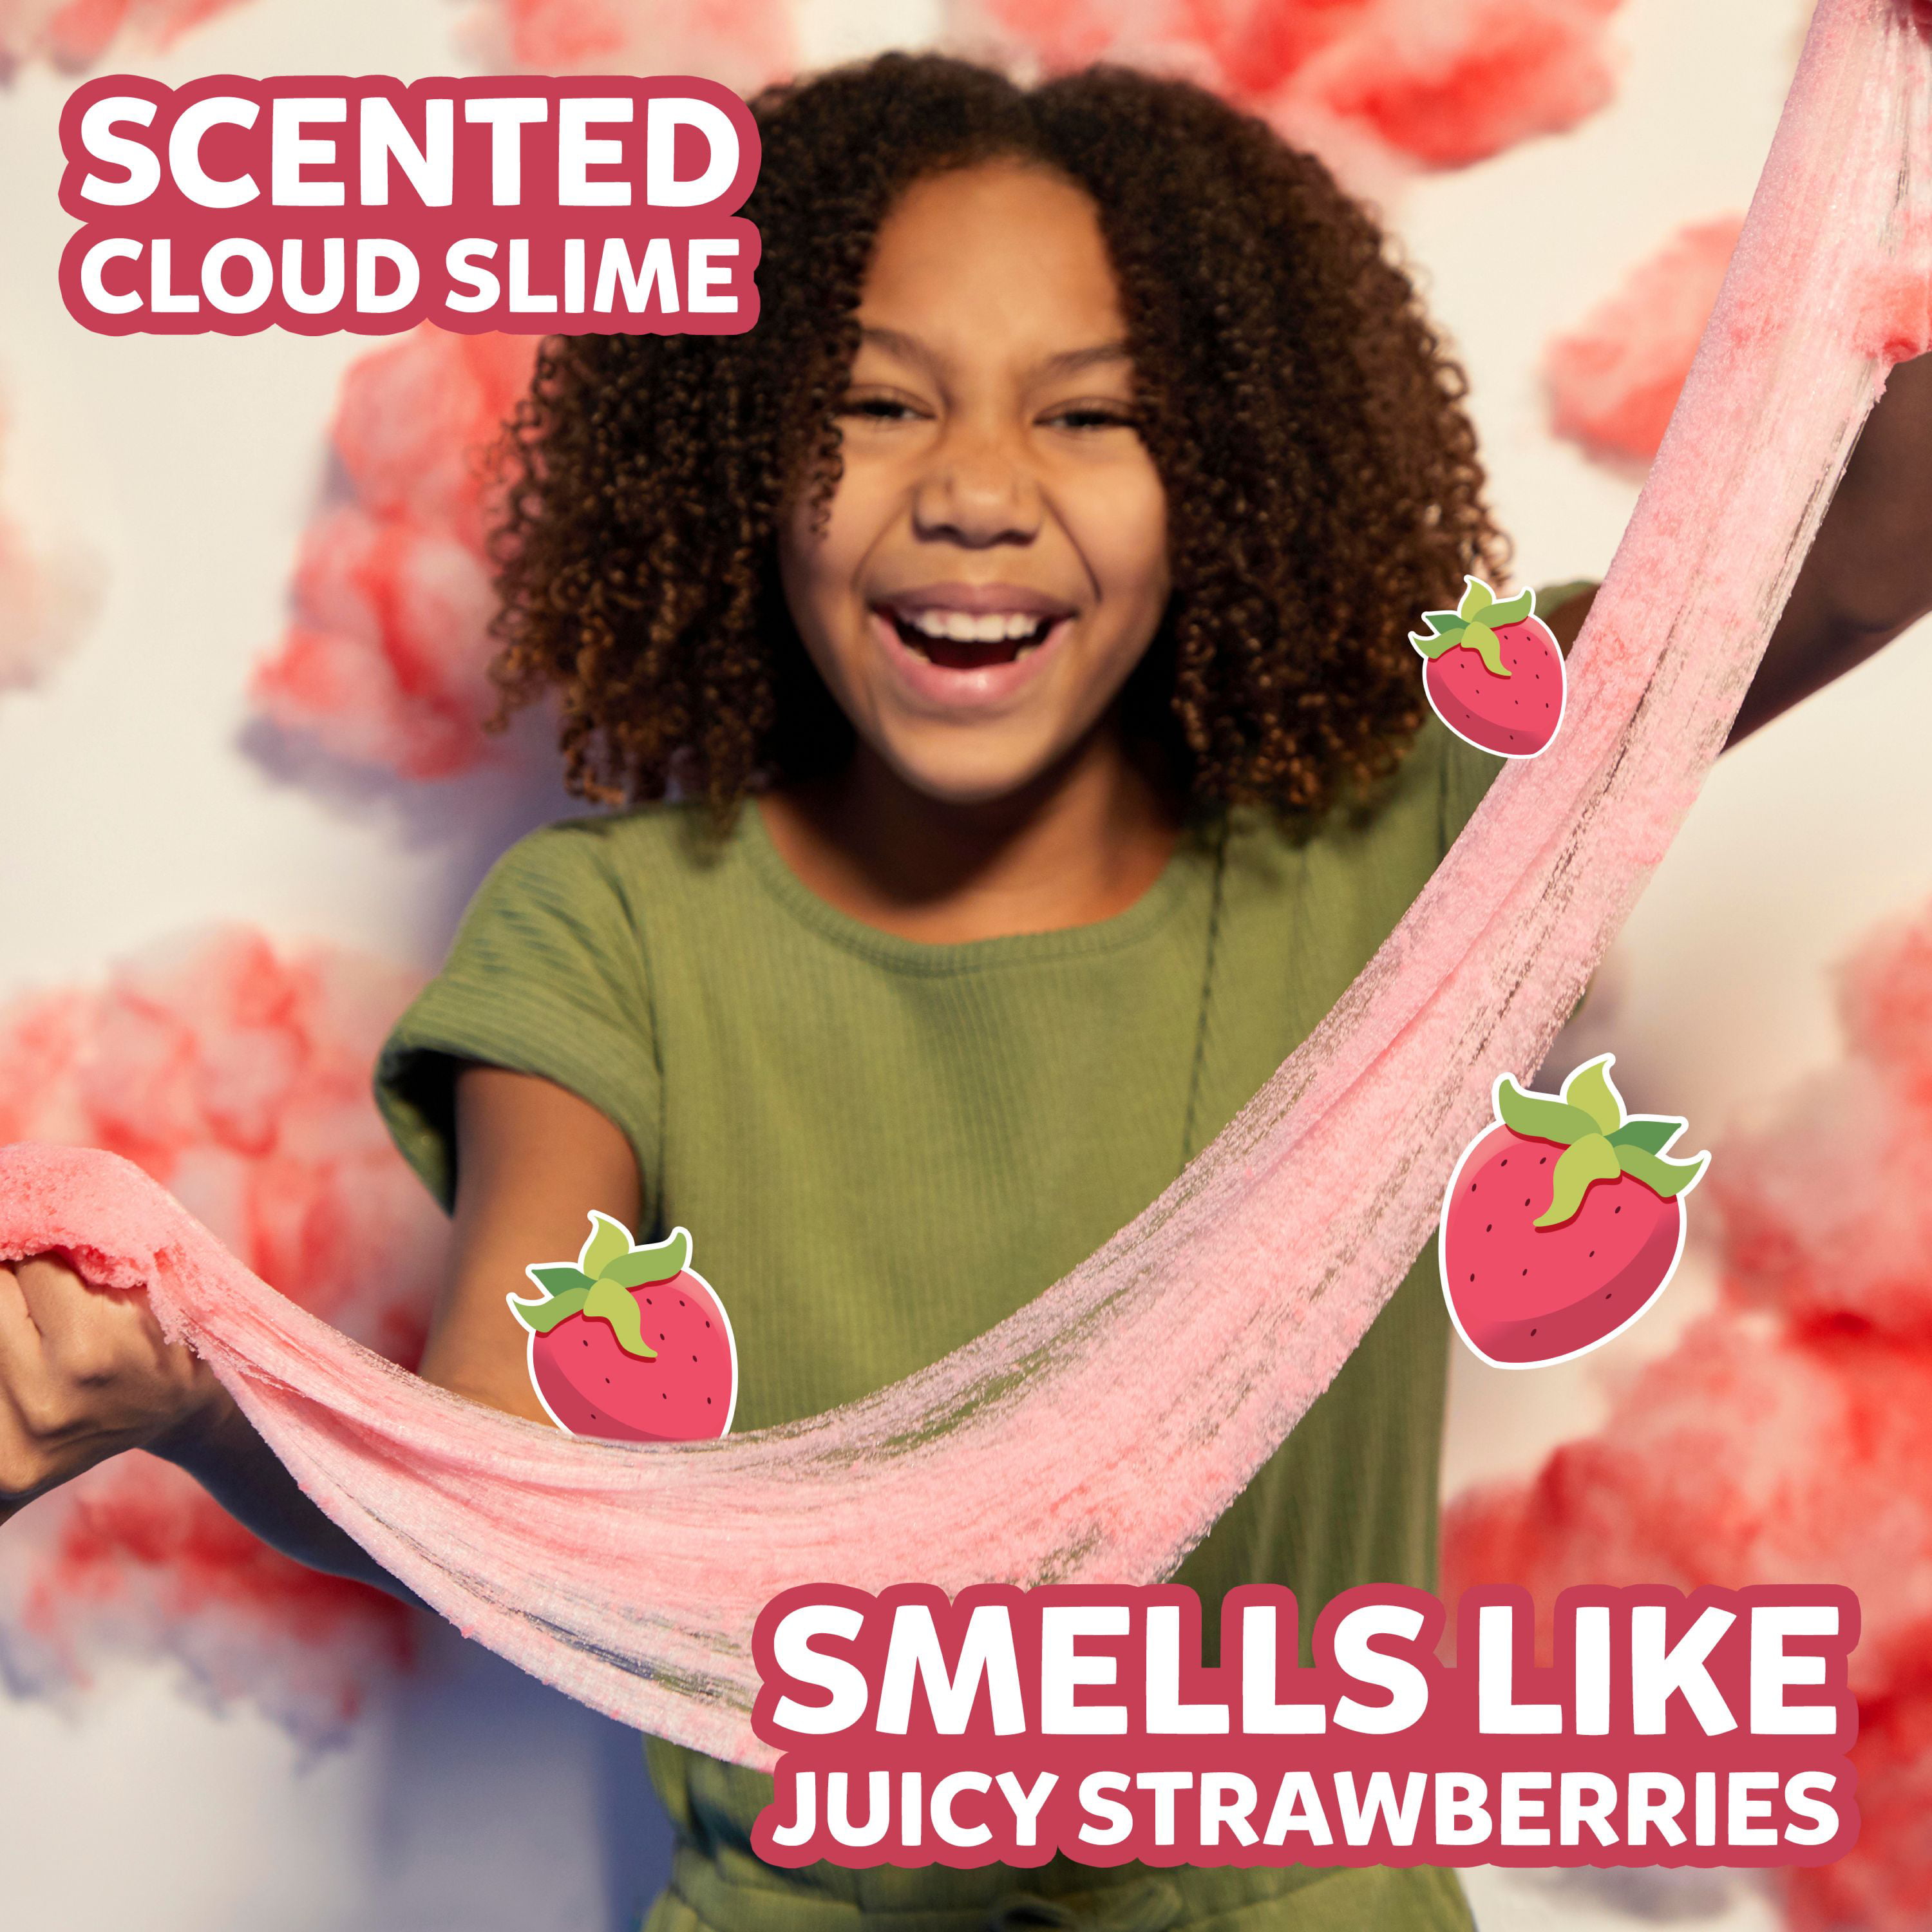 Elmer's Gue Pre-Made Slime 8oz-Strawberry Cloud, 1 count - Kroger